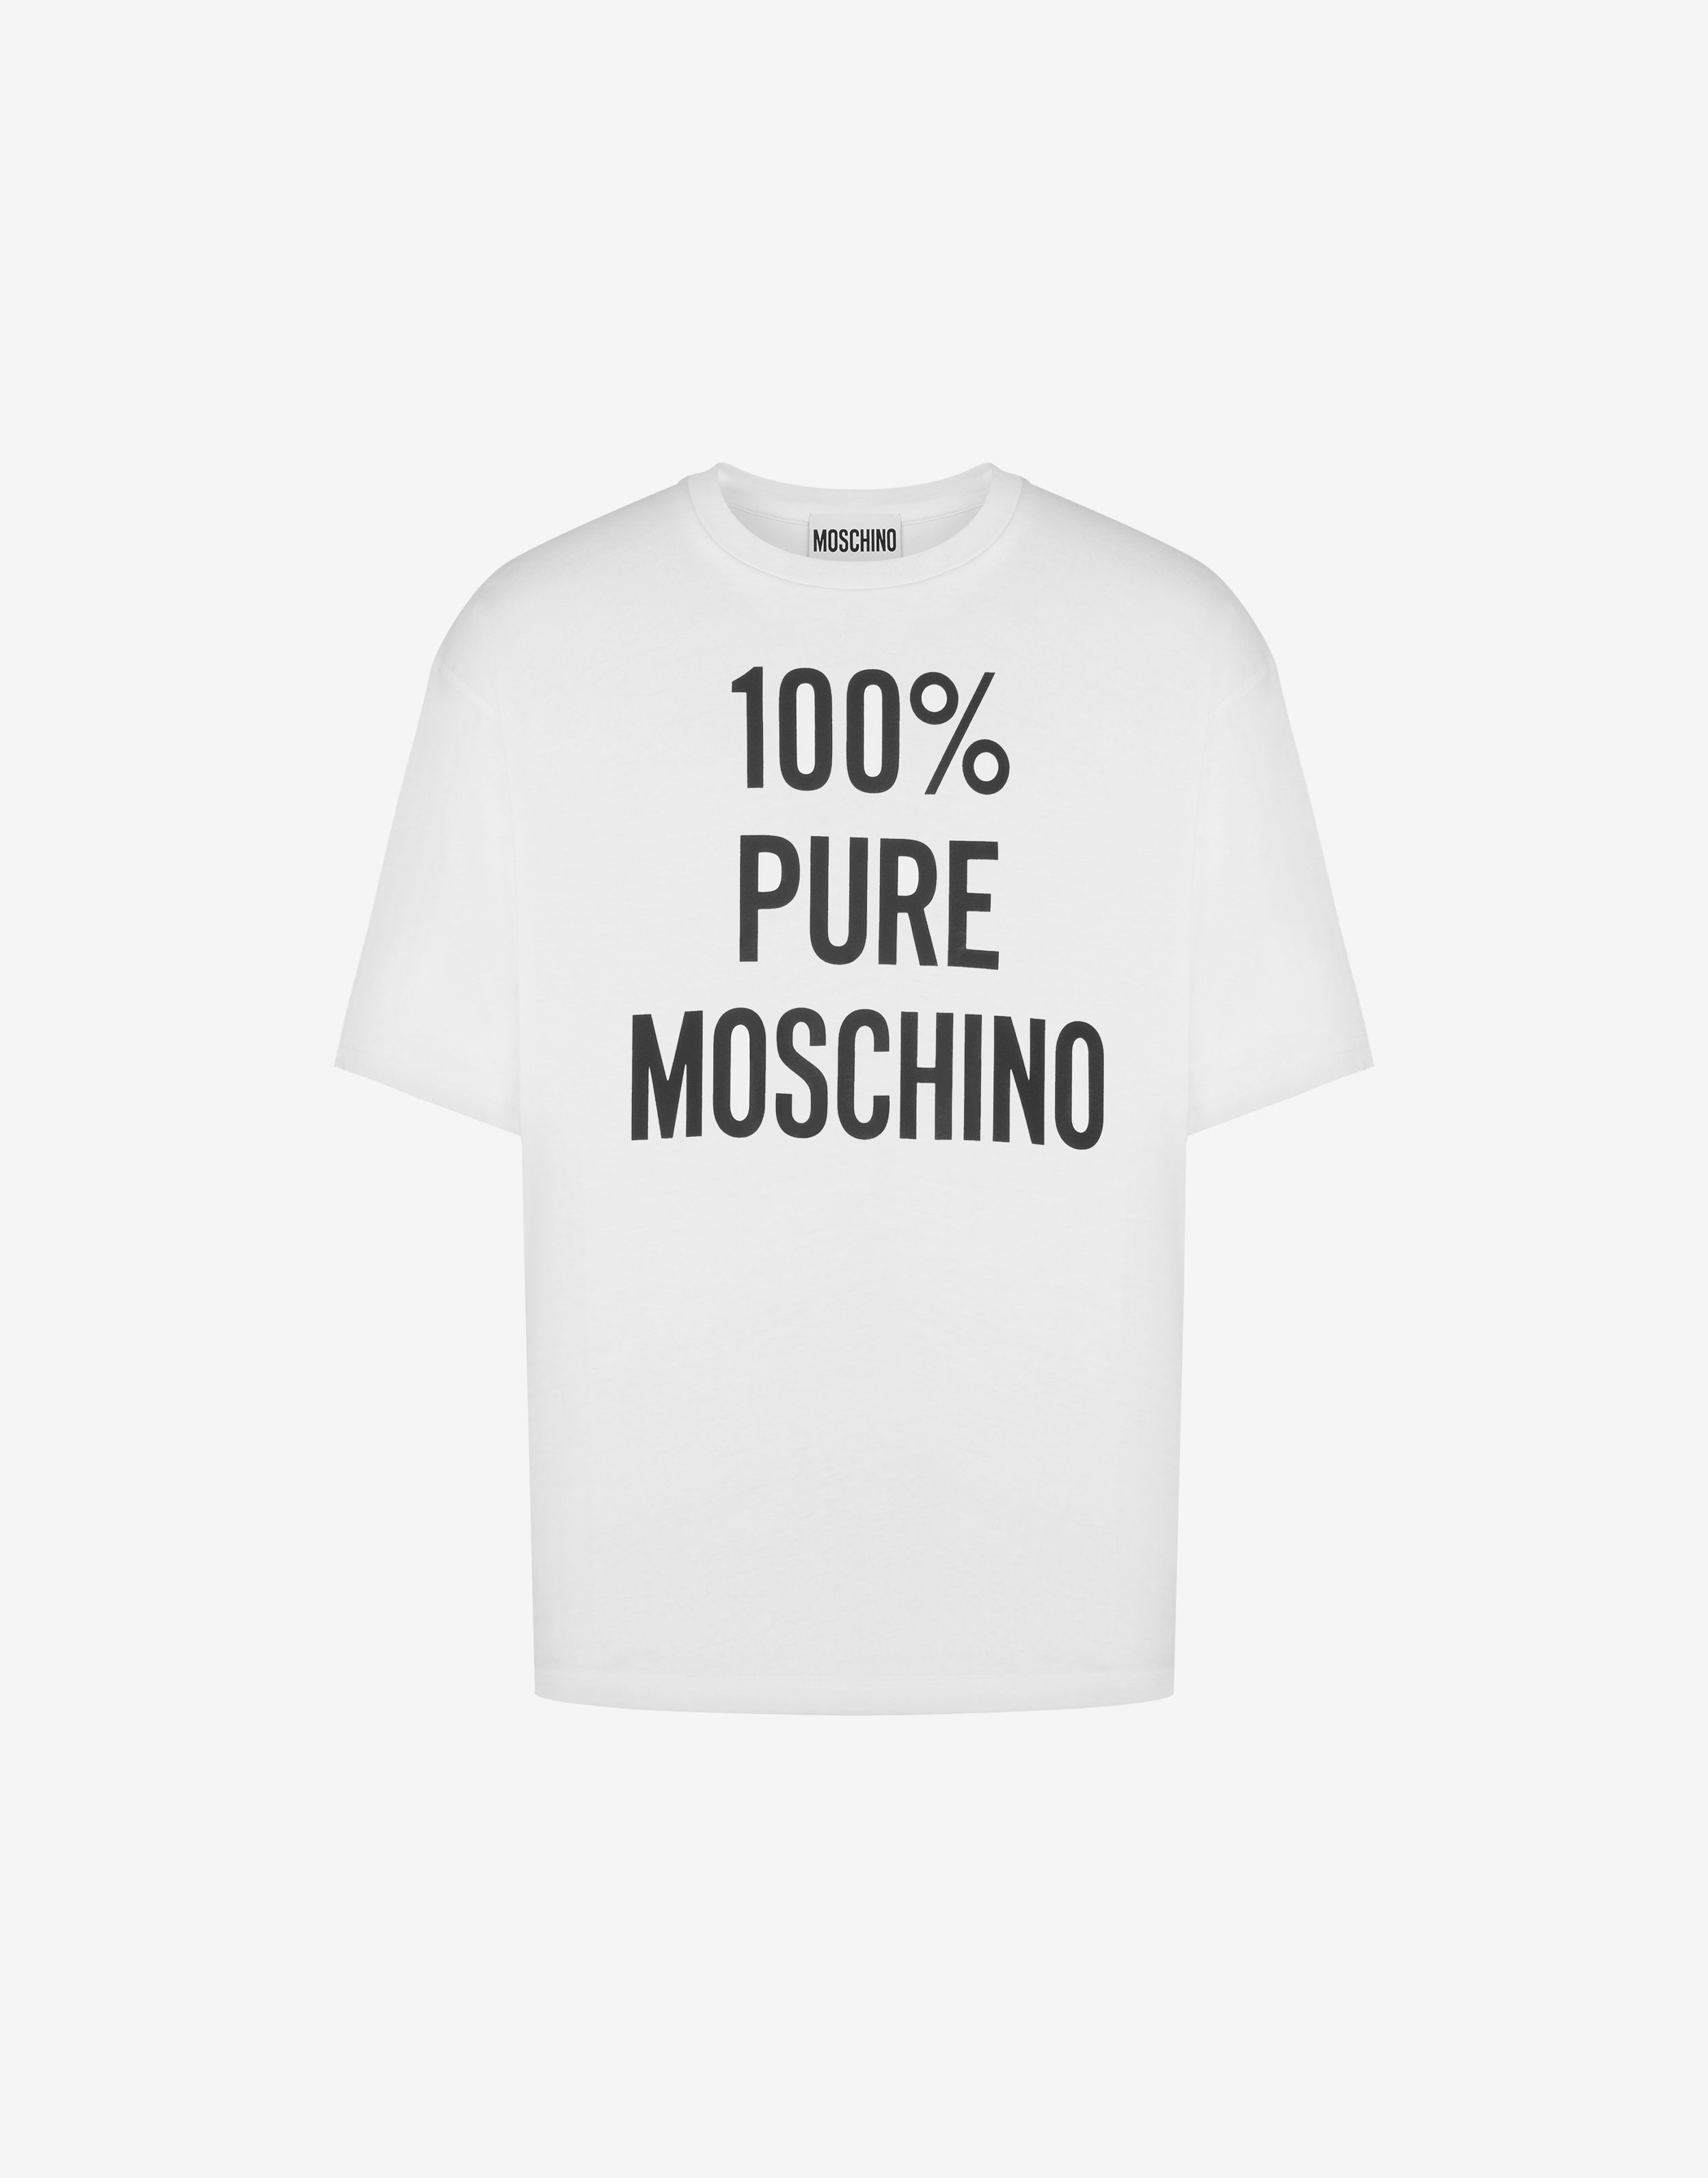 Moschino T Shirt Men Free Shipping Online | website.jkuat.ac.ke